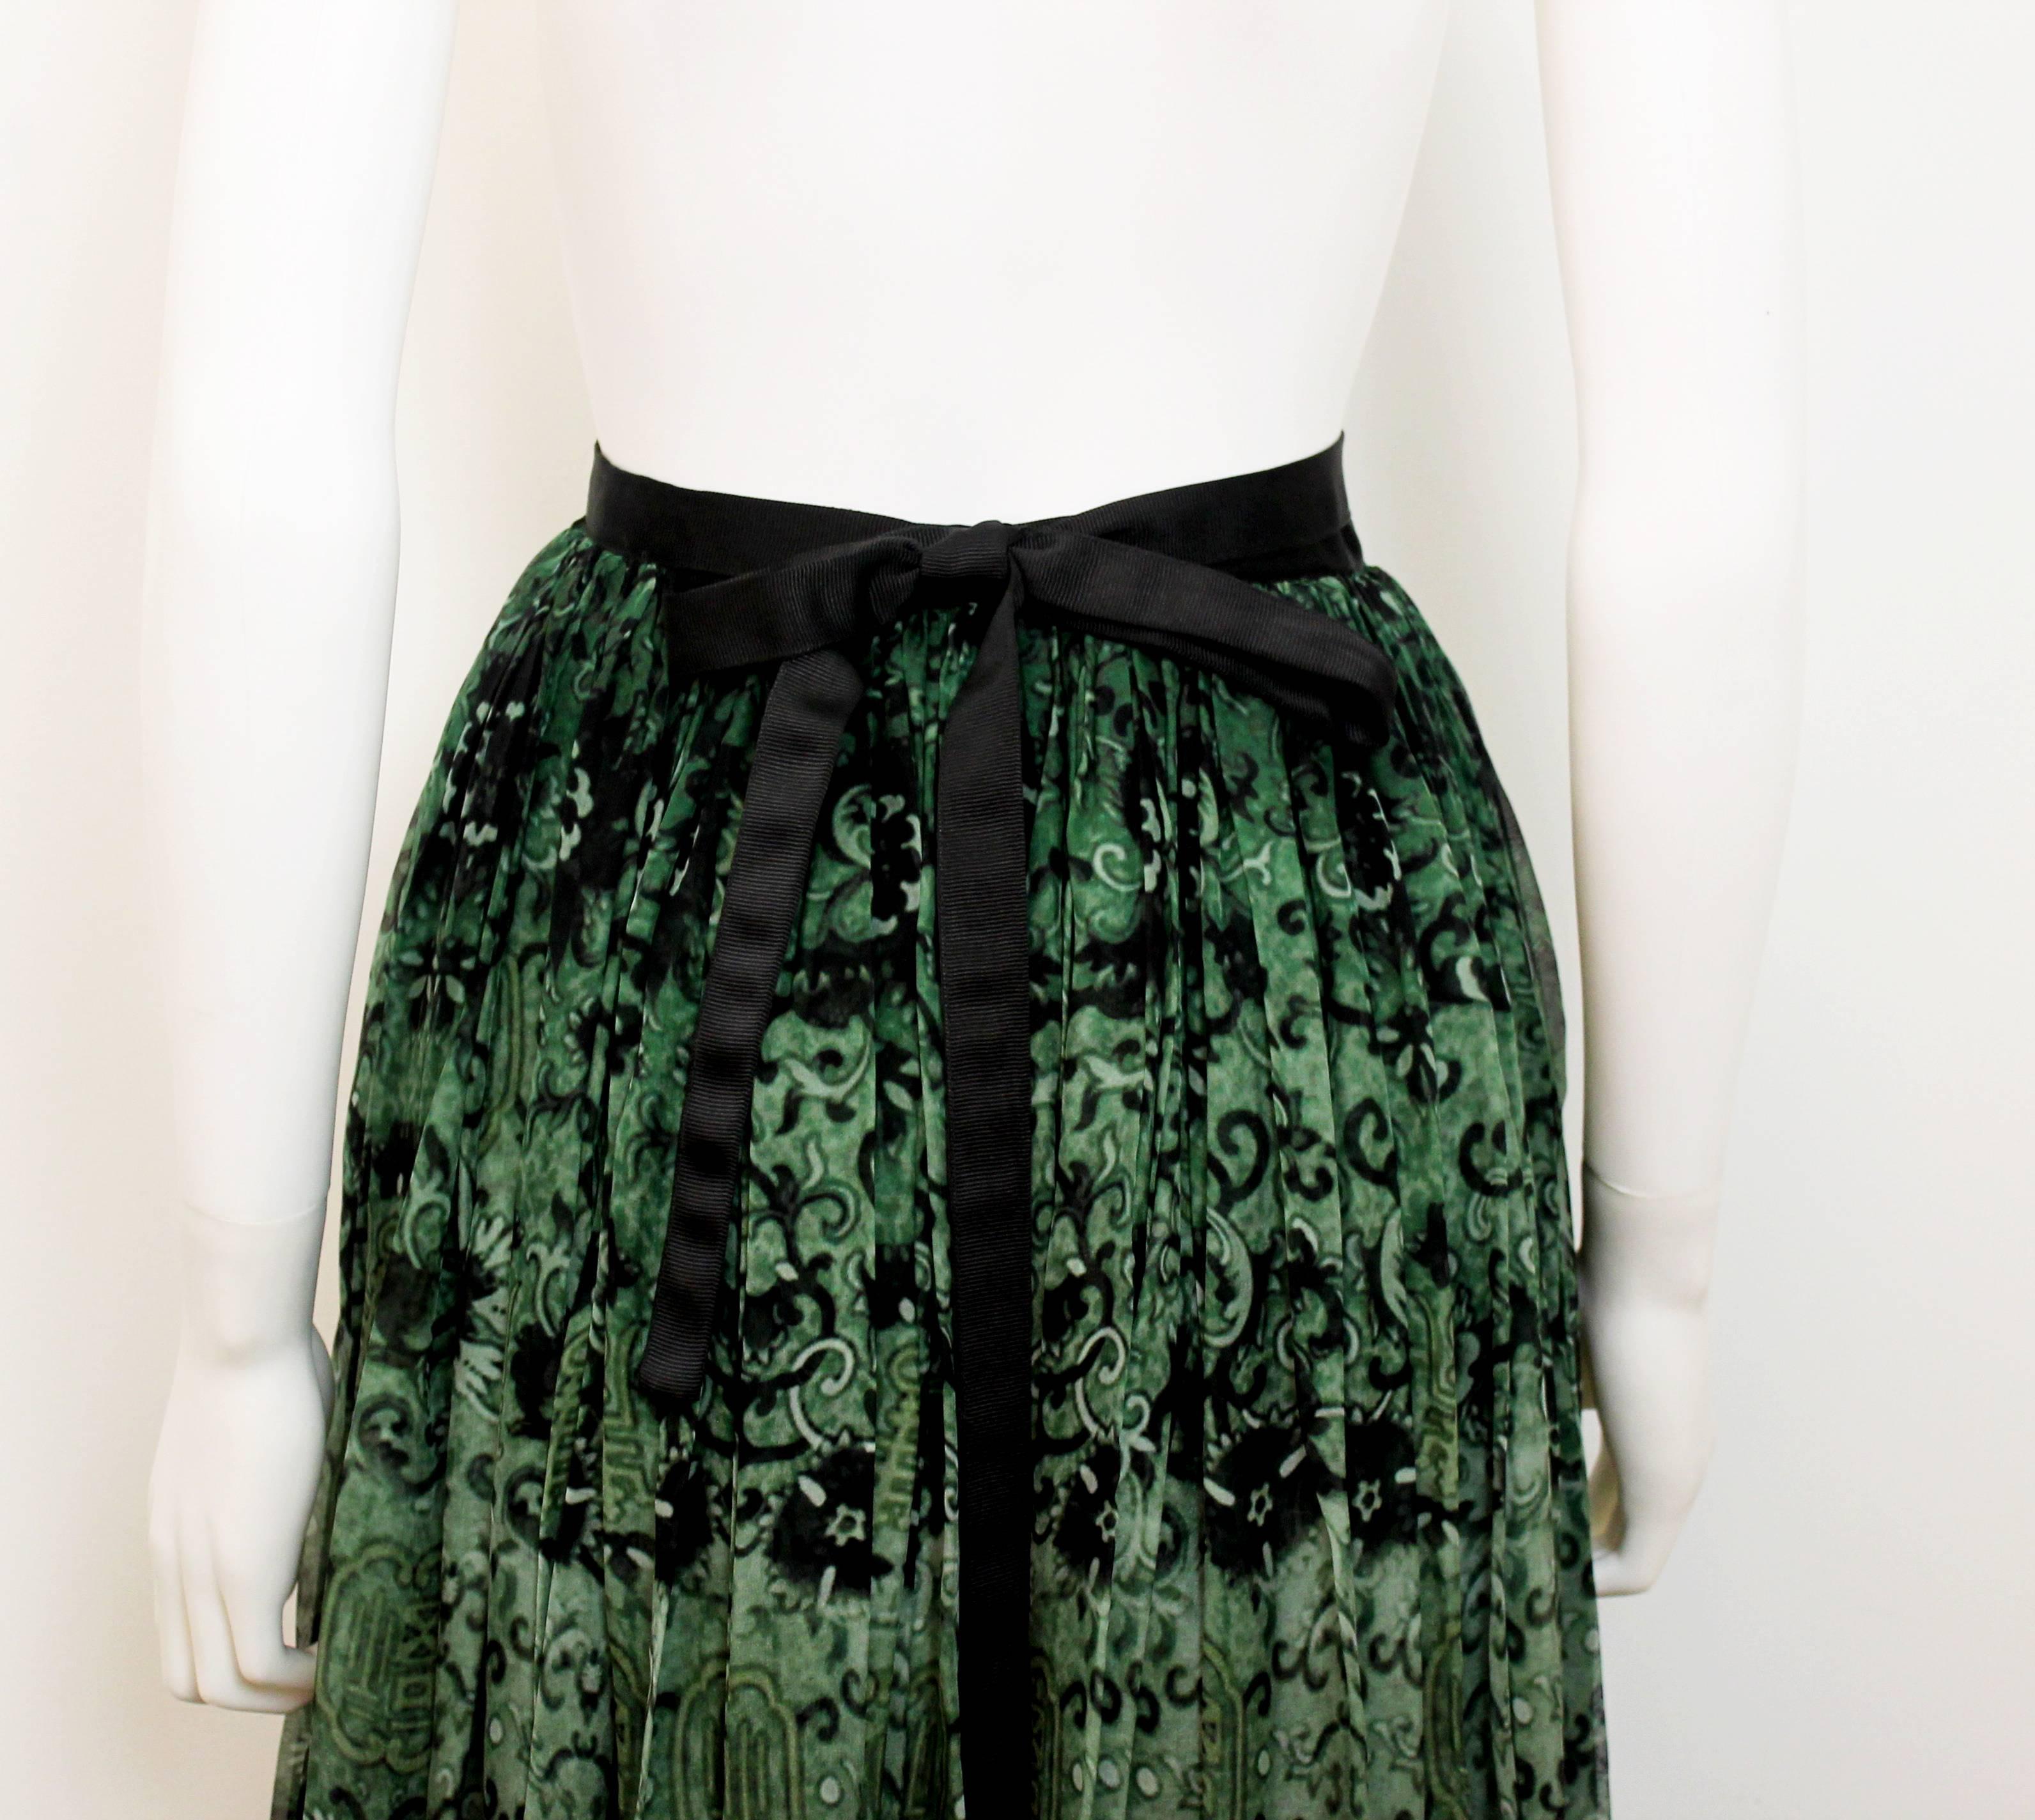 Mary Katrantzou AW 2011 Runway Emerald Printed Wrap-Skirt 3